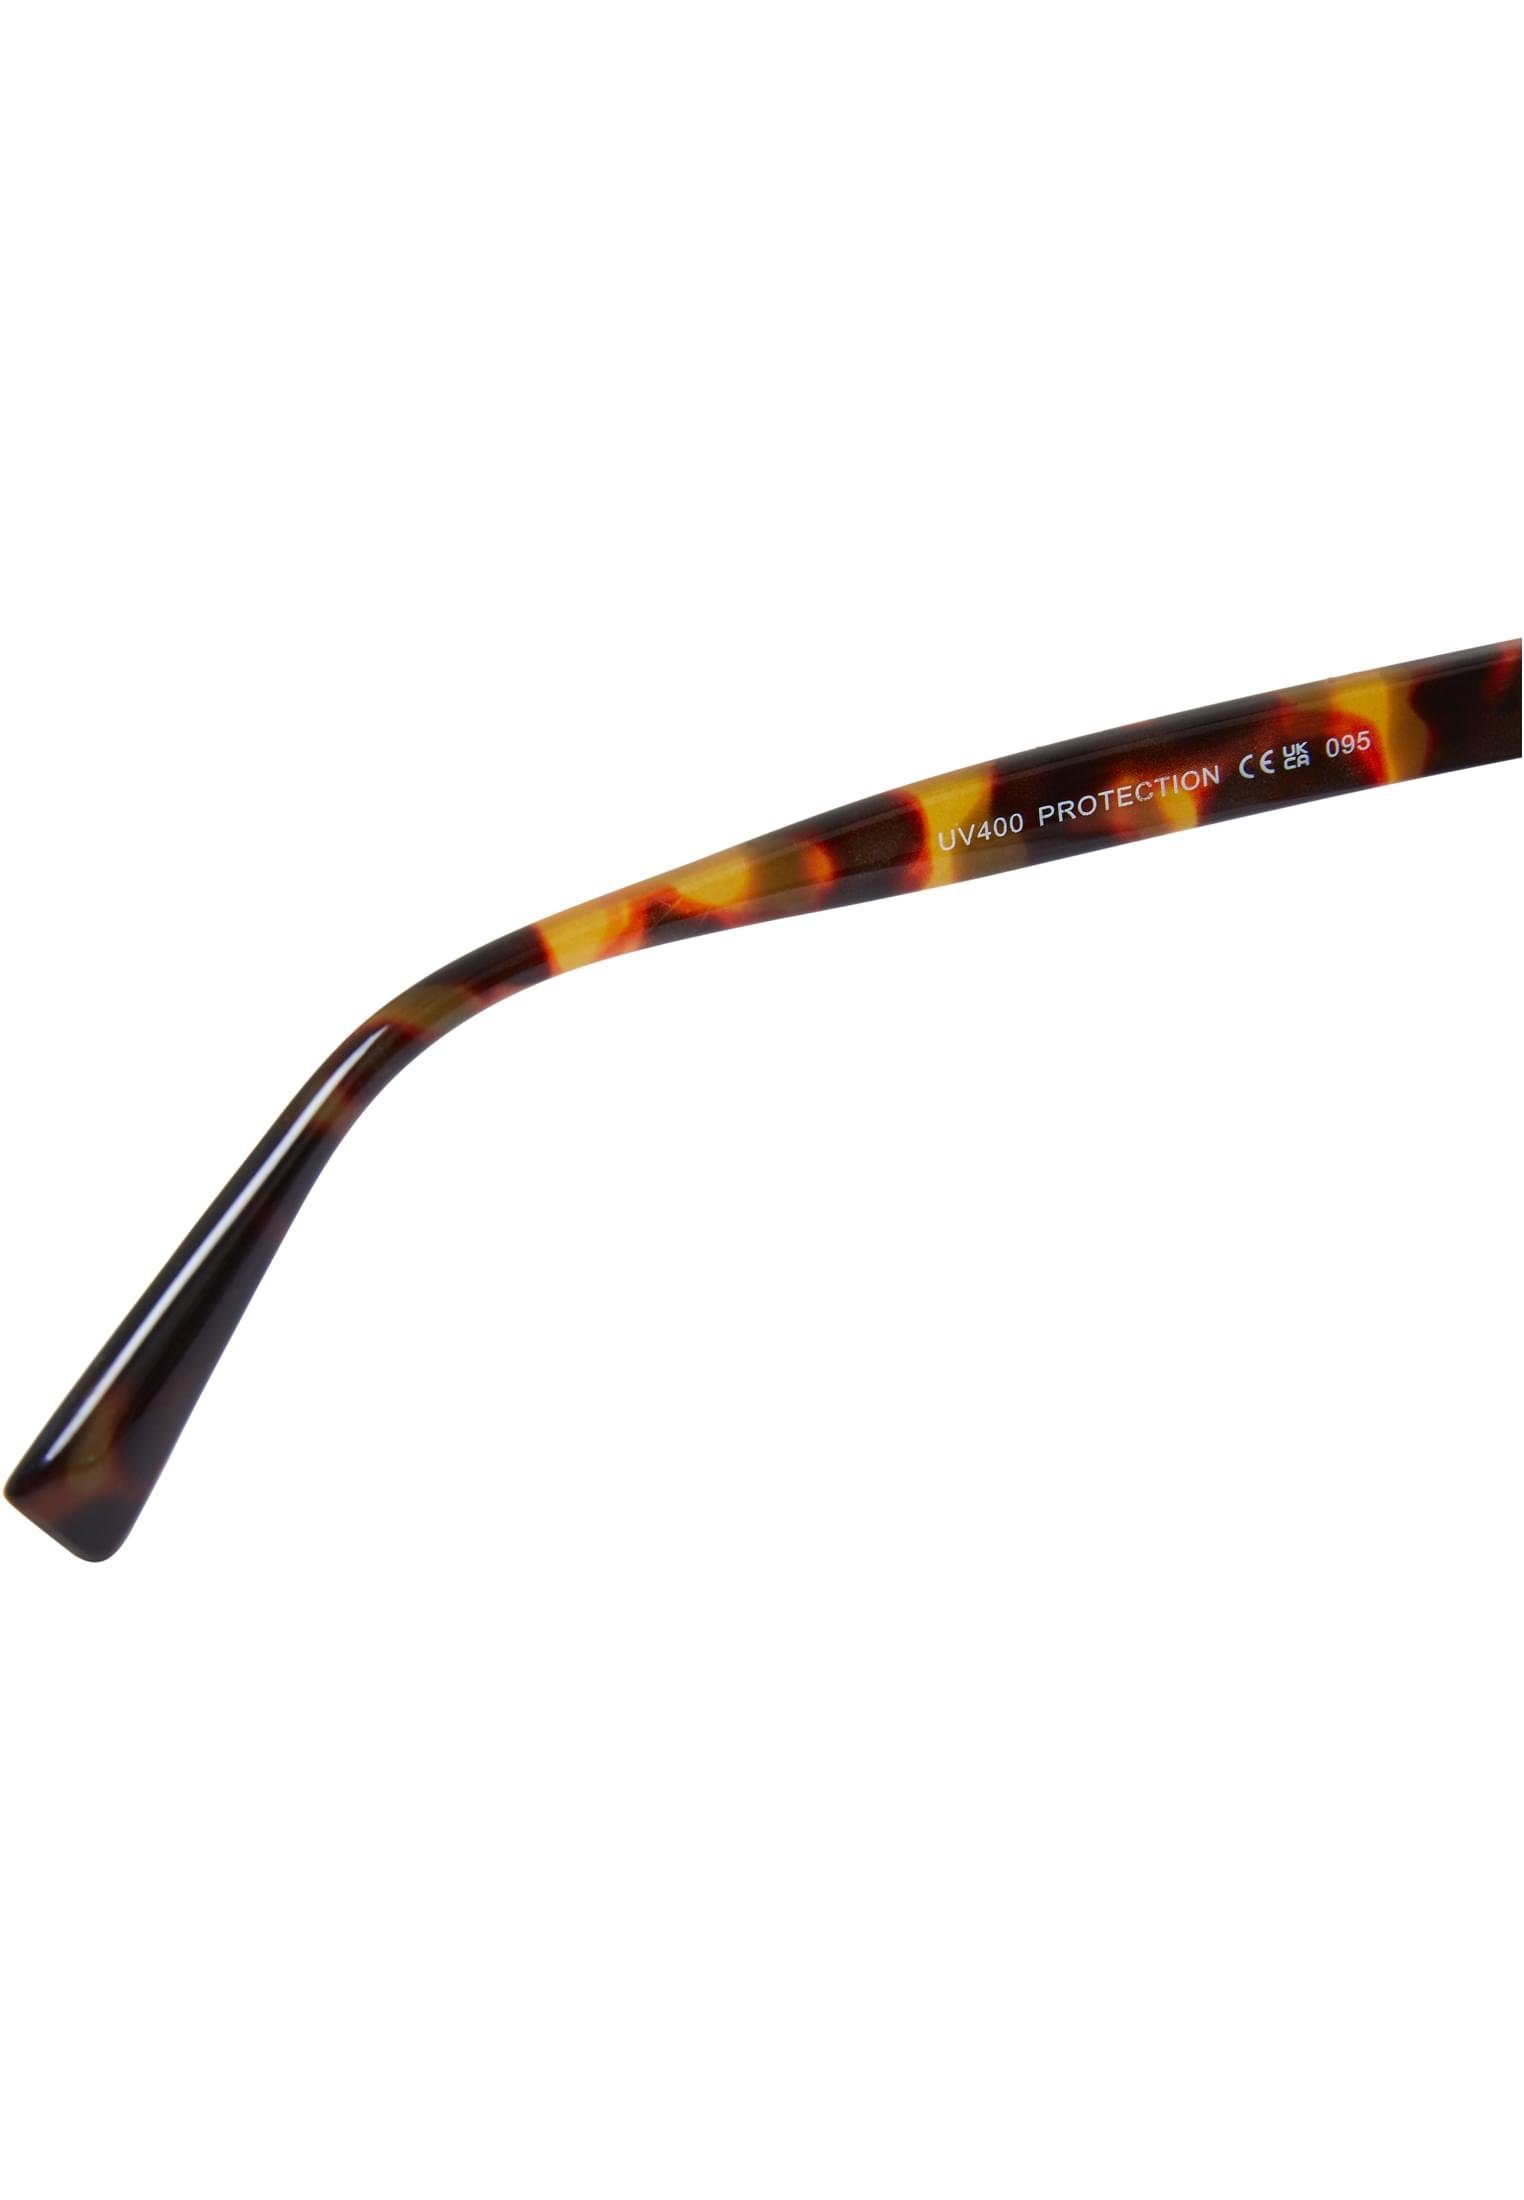 URBAN CLASSICS Sonnenbrille Unisex Sunglasses Naples, Kann als modisches  Accessoire getragen werden